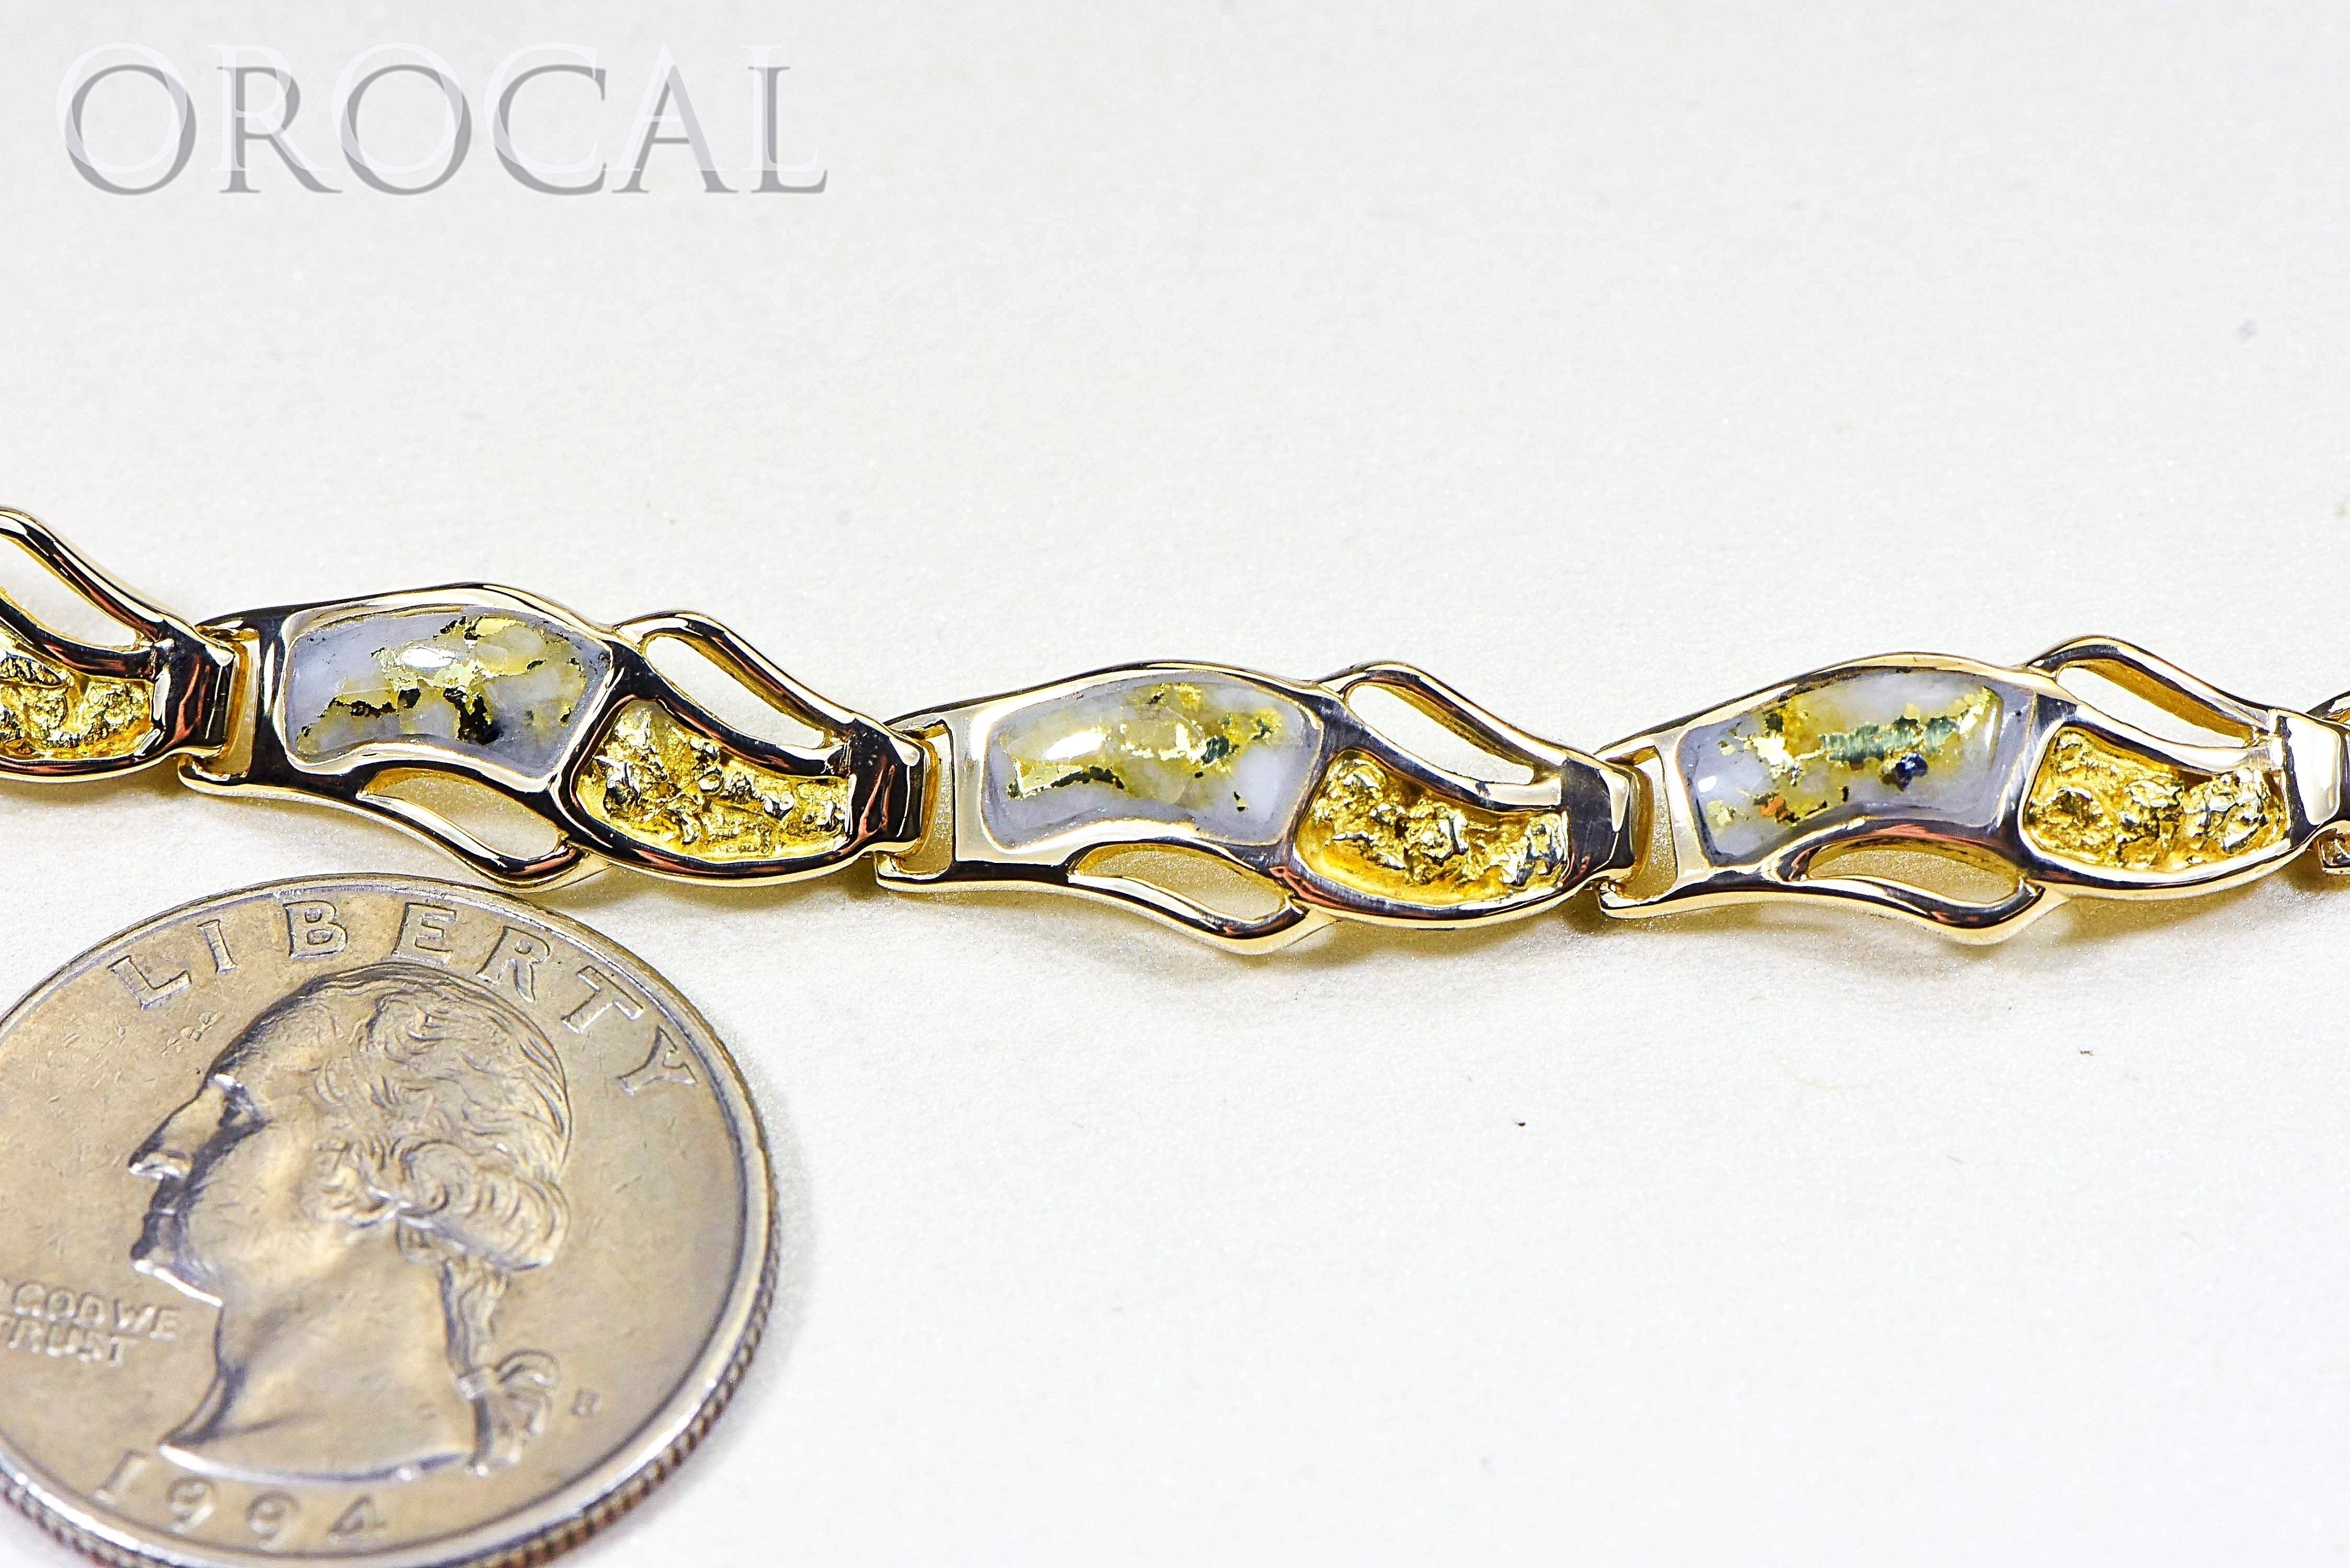 Gold Quartz Bracelet "Orocal" BWB24OLQ Genuine Hand Crafted Jewelry - 14K Gold Casting